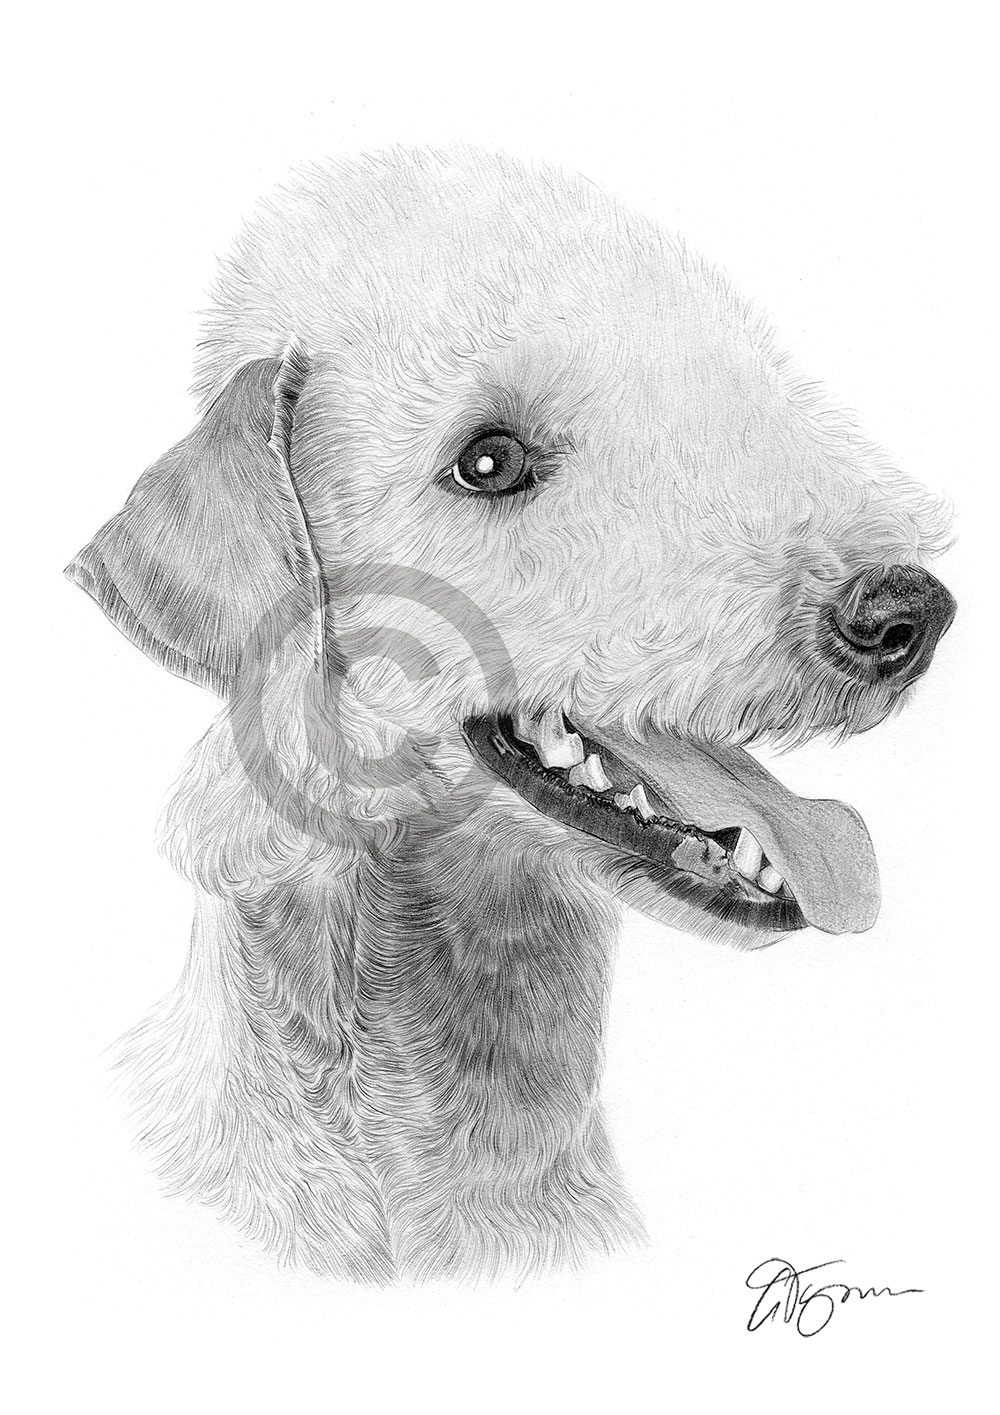 Pencil drawing of a bedlington terrier by artist Gary Tymon